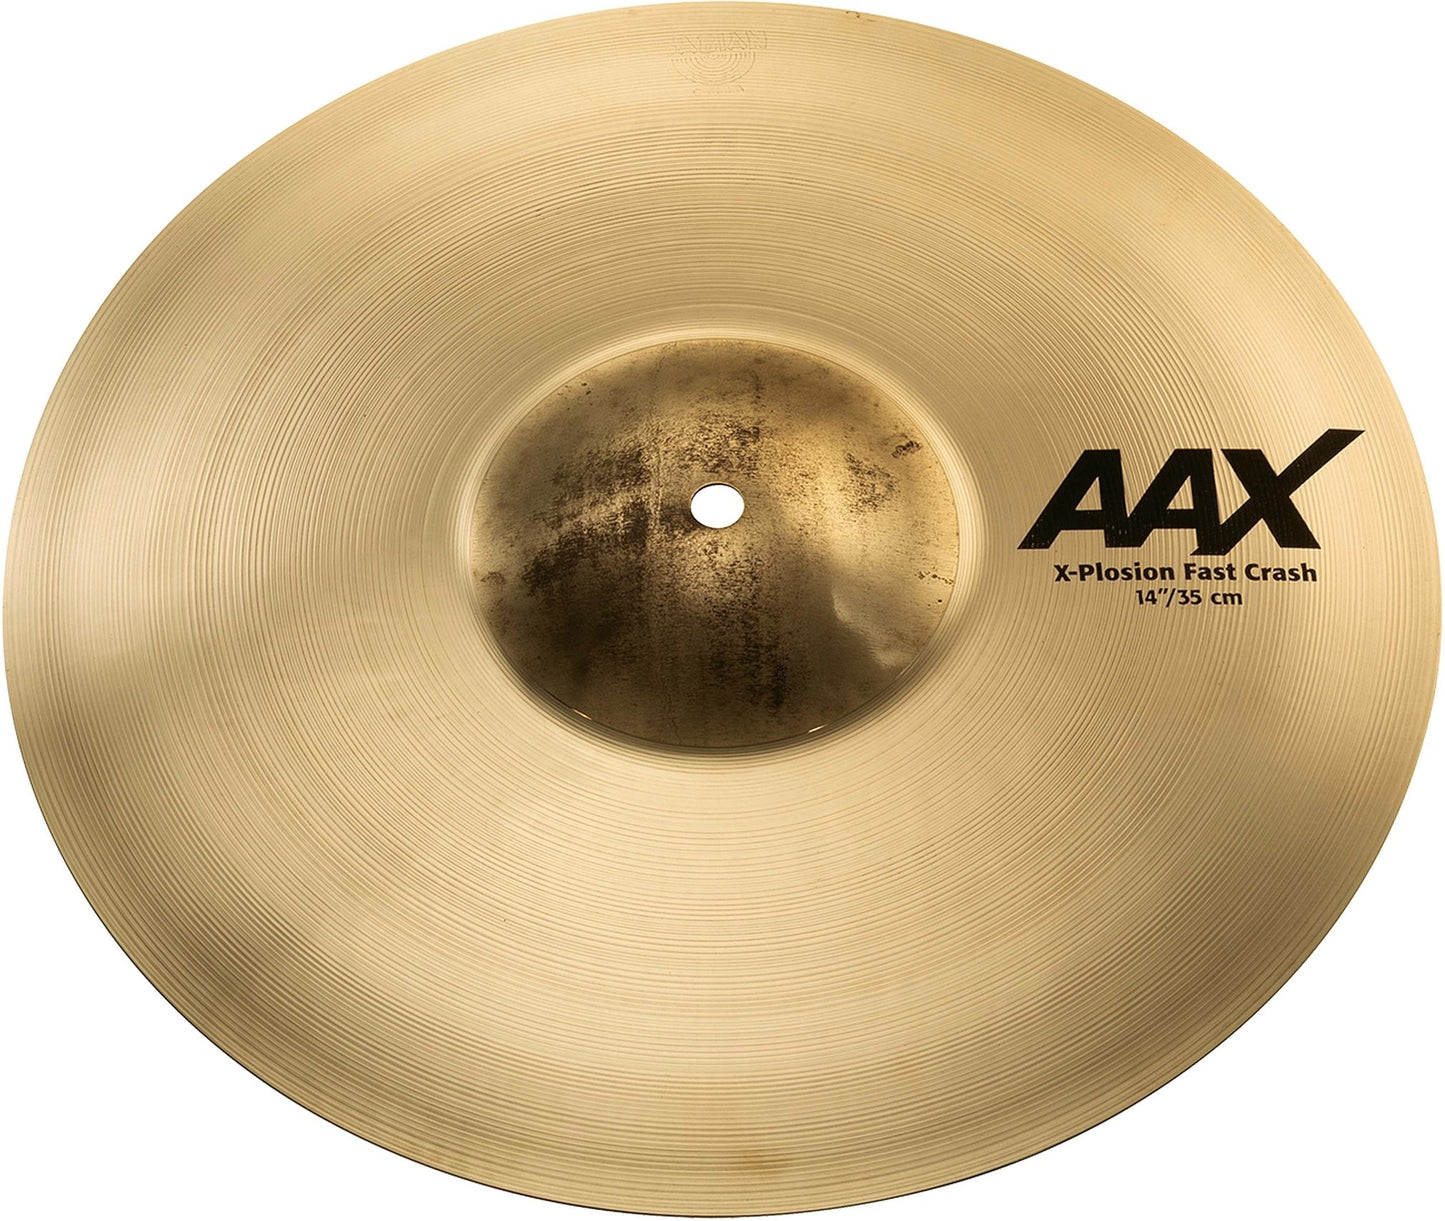 Sabian AAX X-Plosion Fast Crash Cymbal, Brilliant Finish, 14 Inch